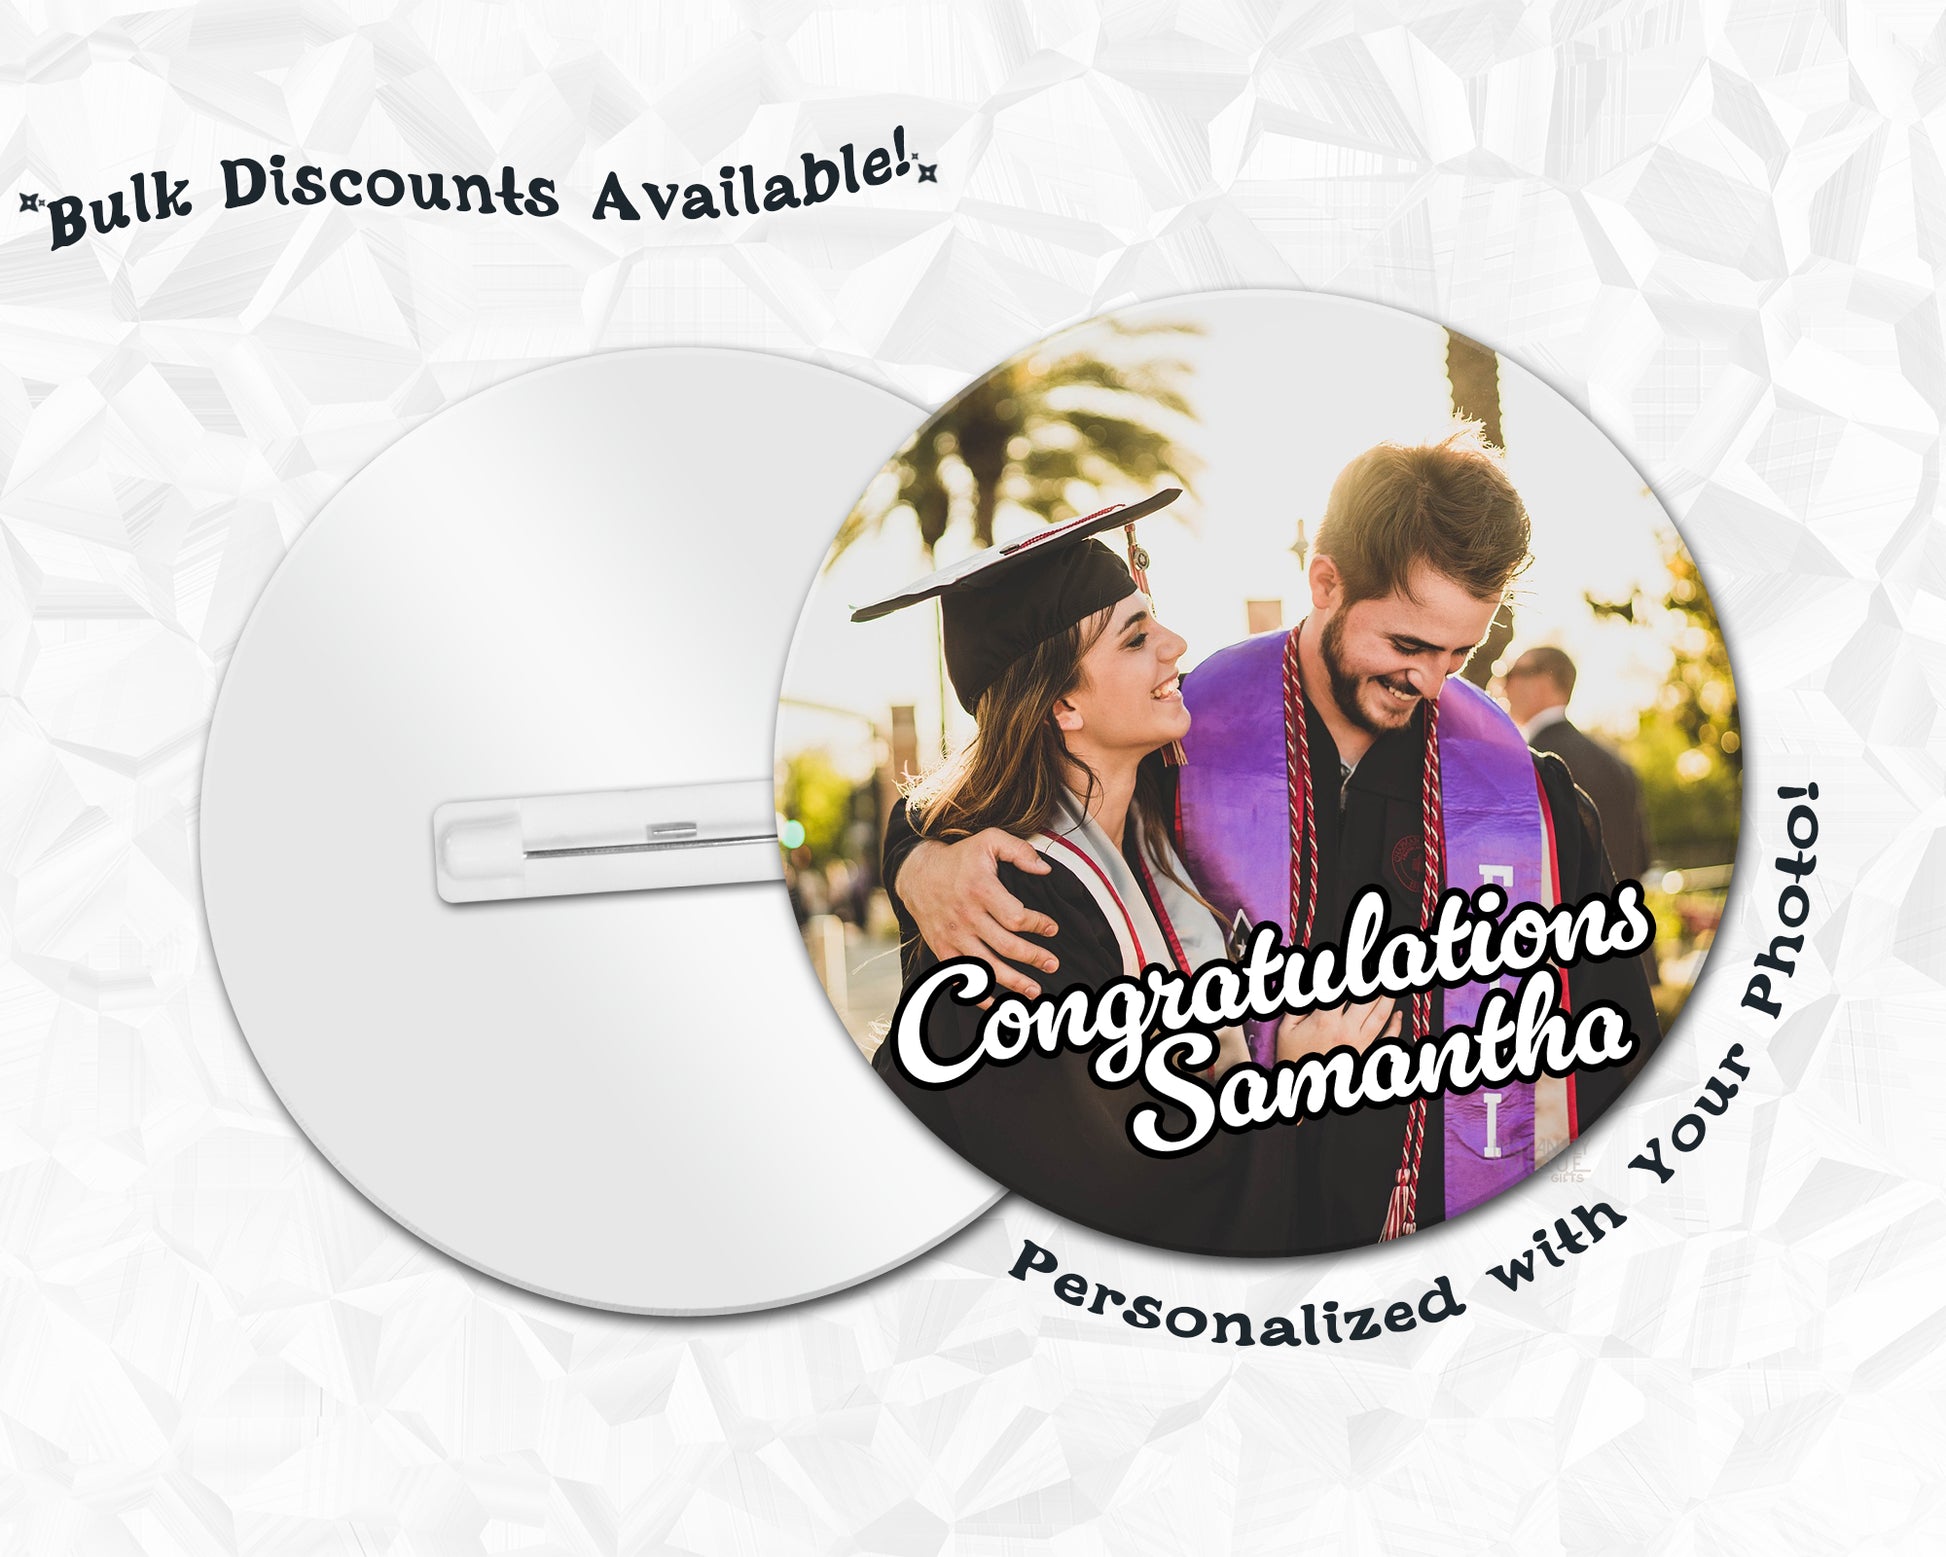 Personalized Graduation Button with Senior Photo - Bulk Discounts!